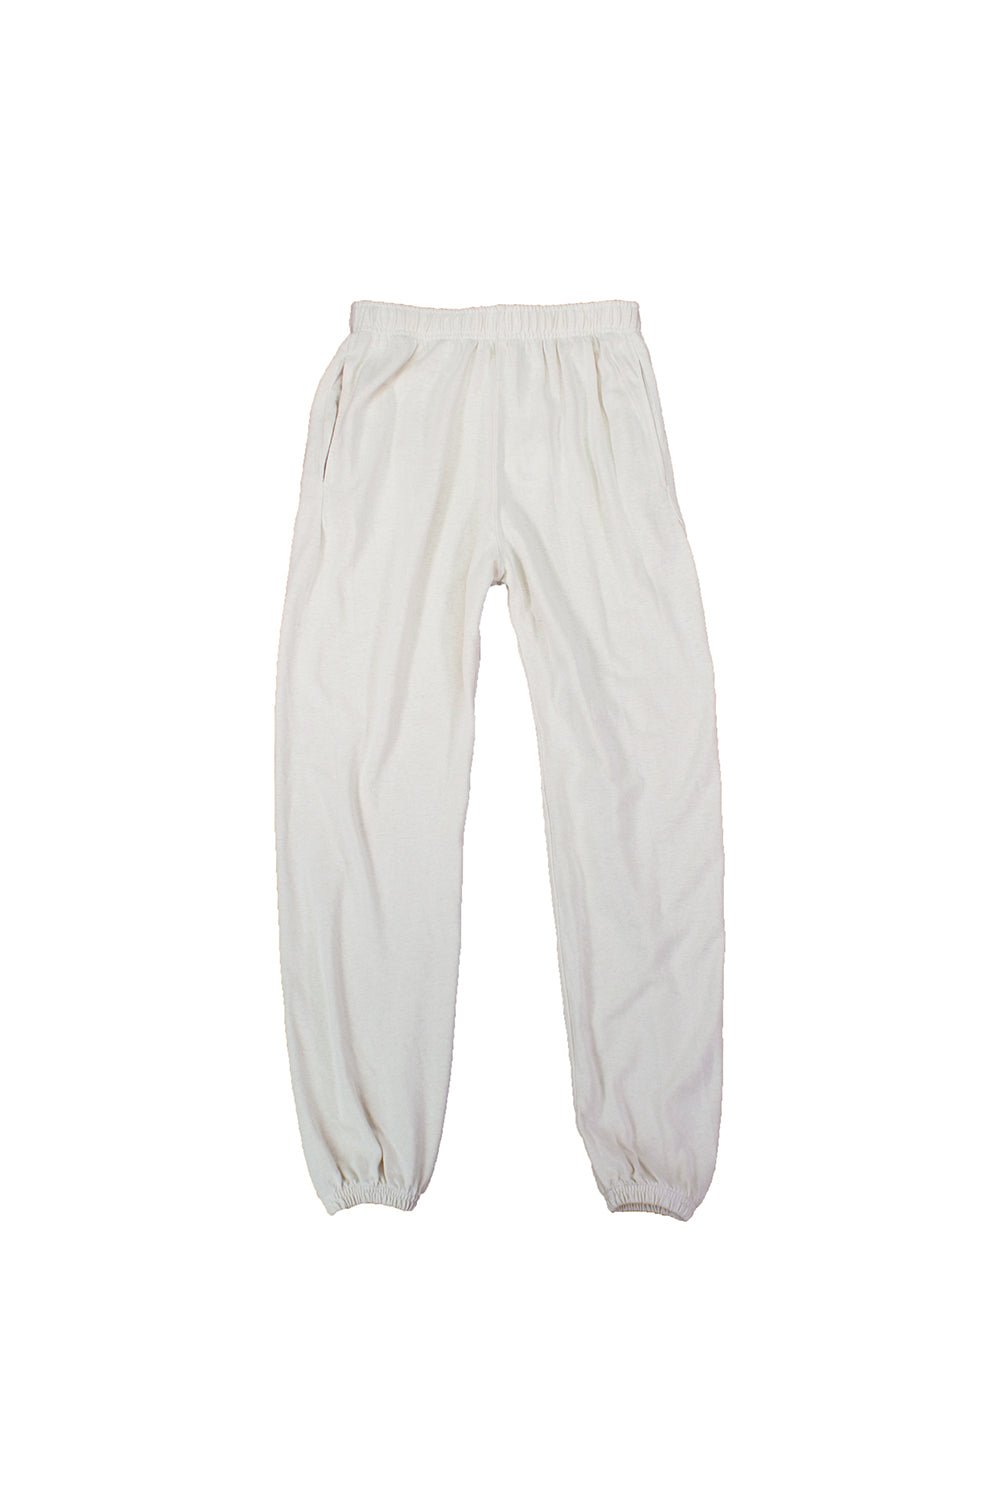 Alaska Hemp Wool Sweatpant | Jungmaven Hemp Clothing & Accessories / Color: Washed White